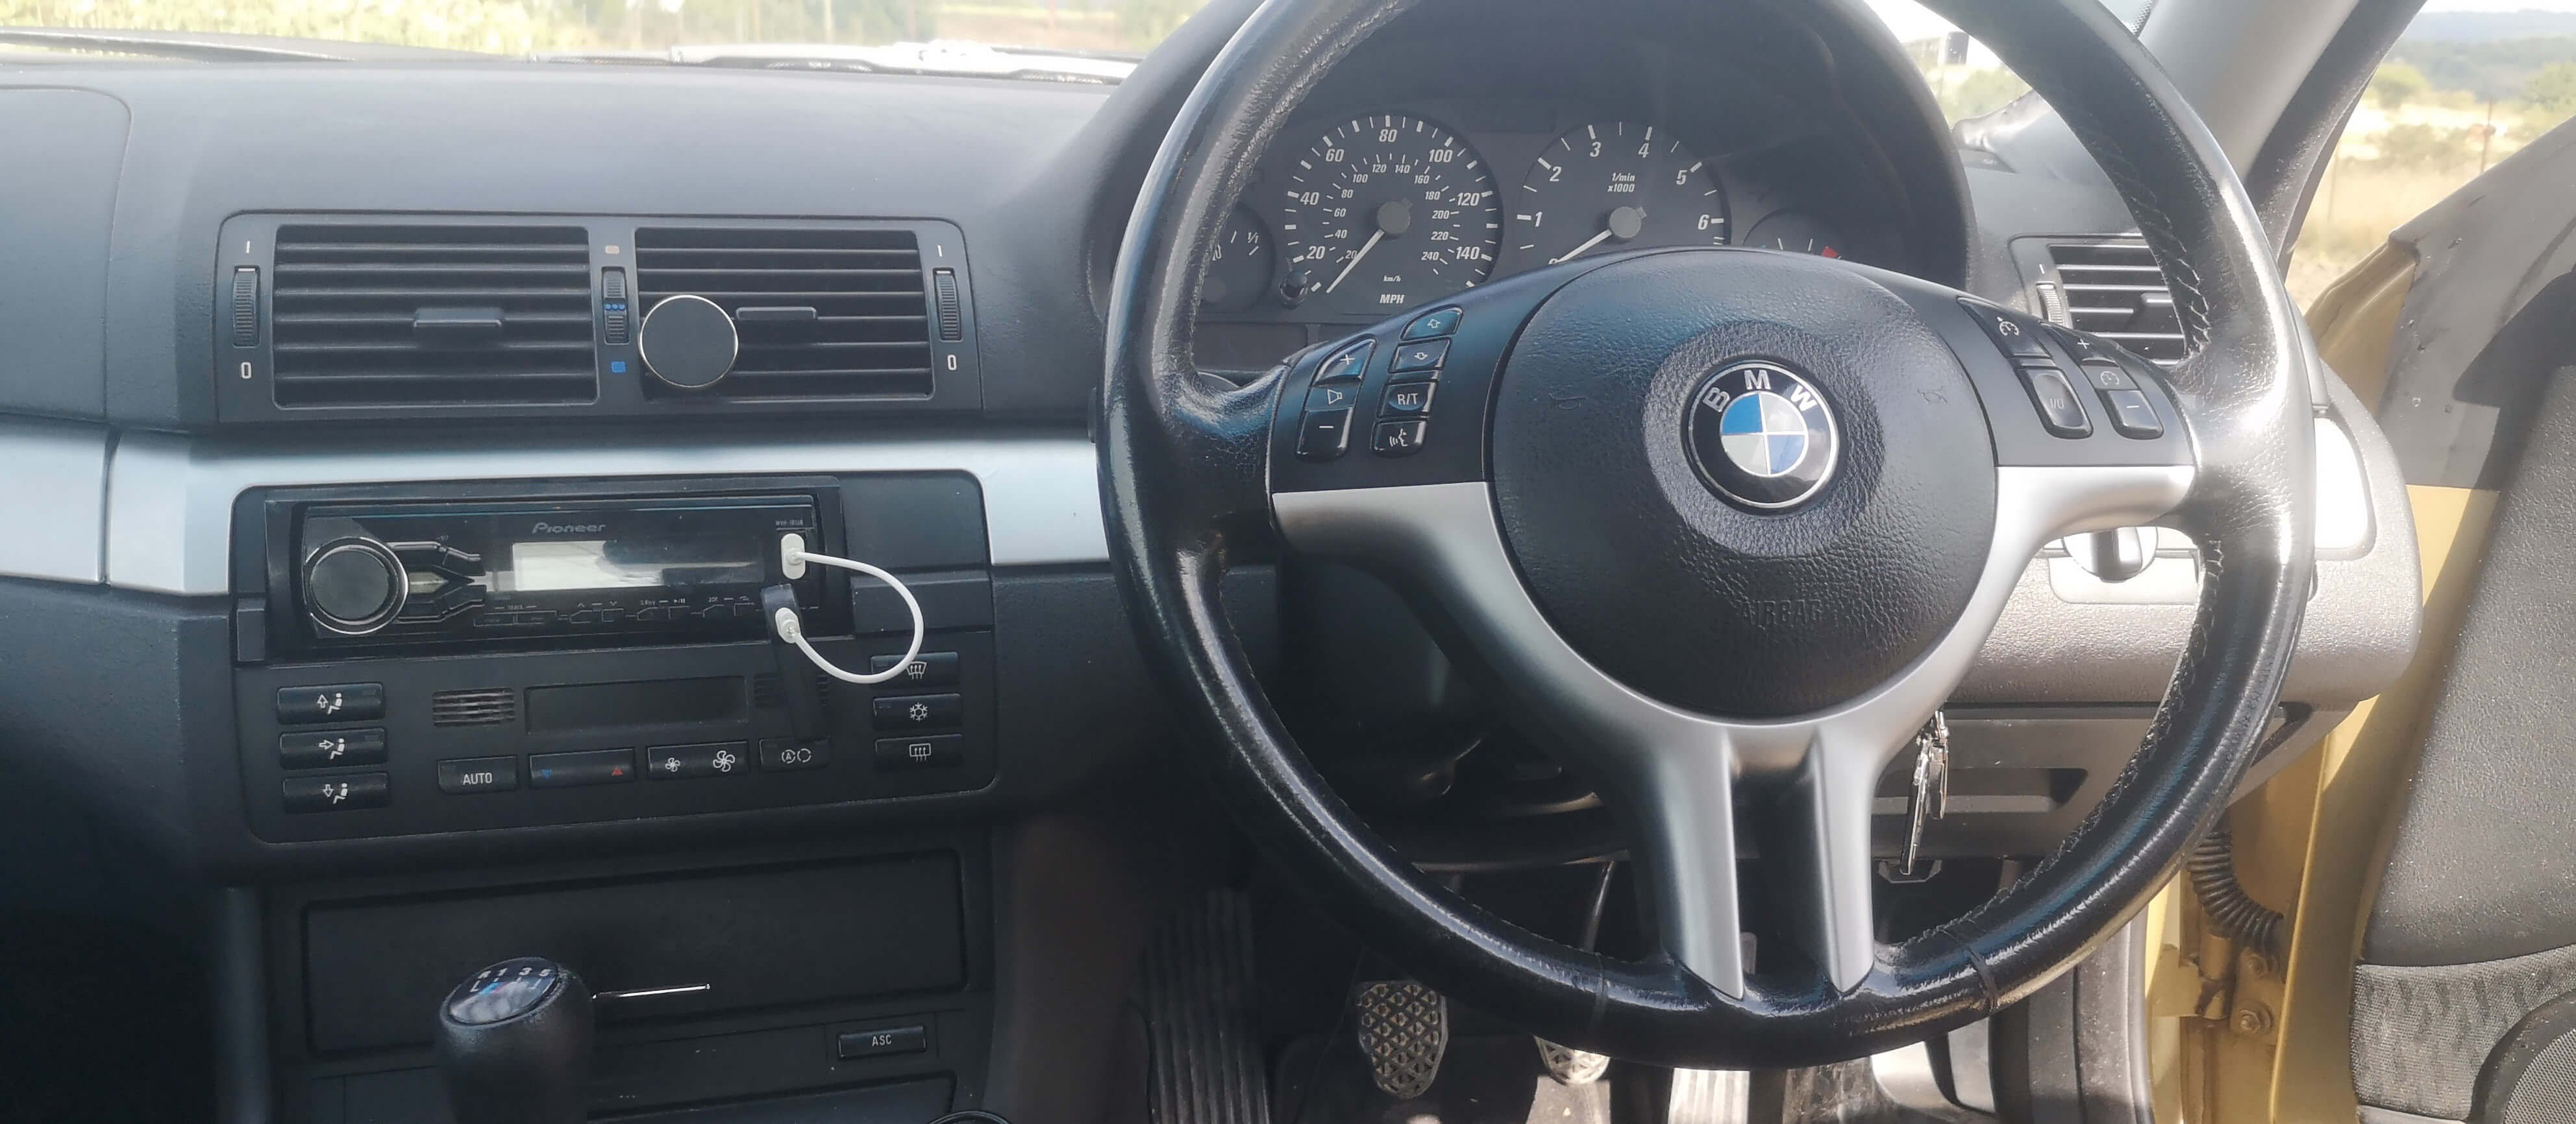 BMW 320 Ci 170hp